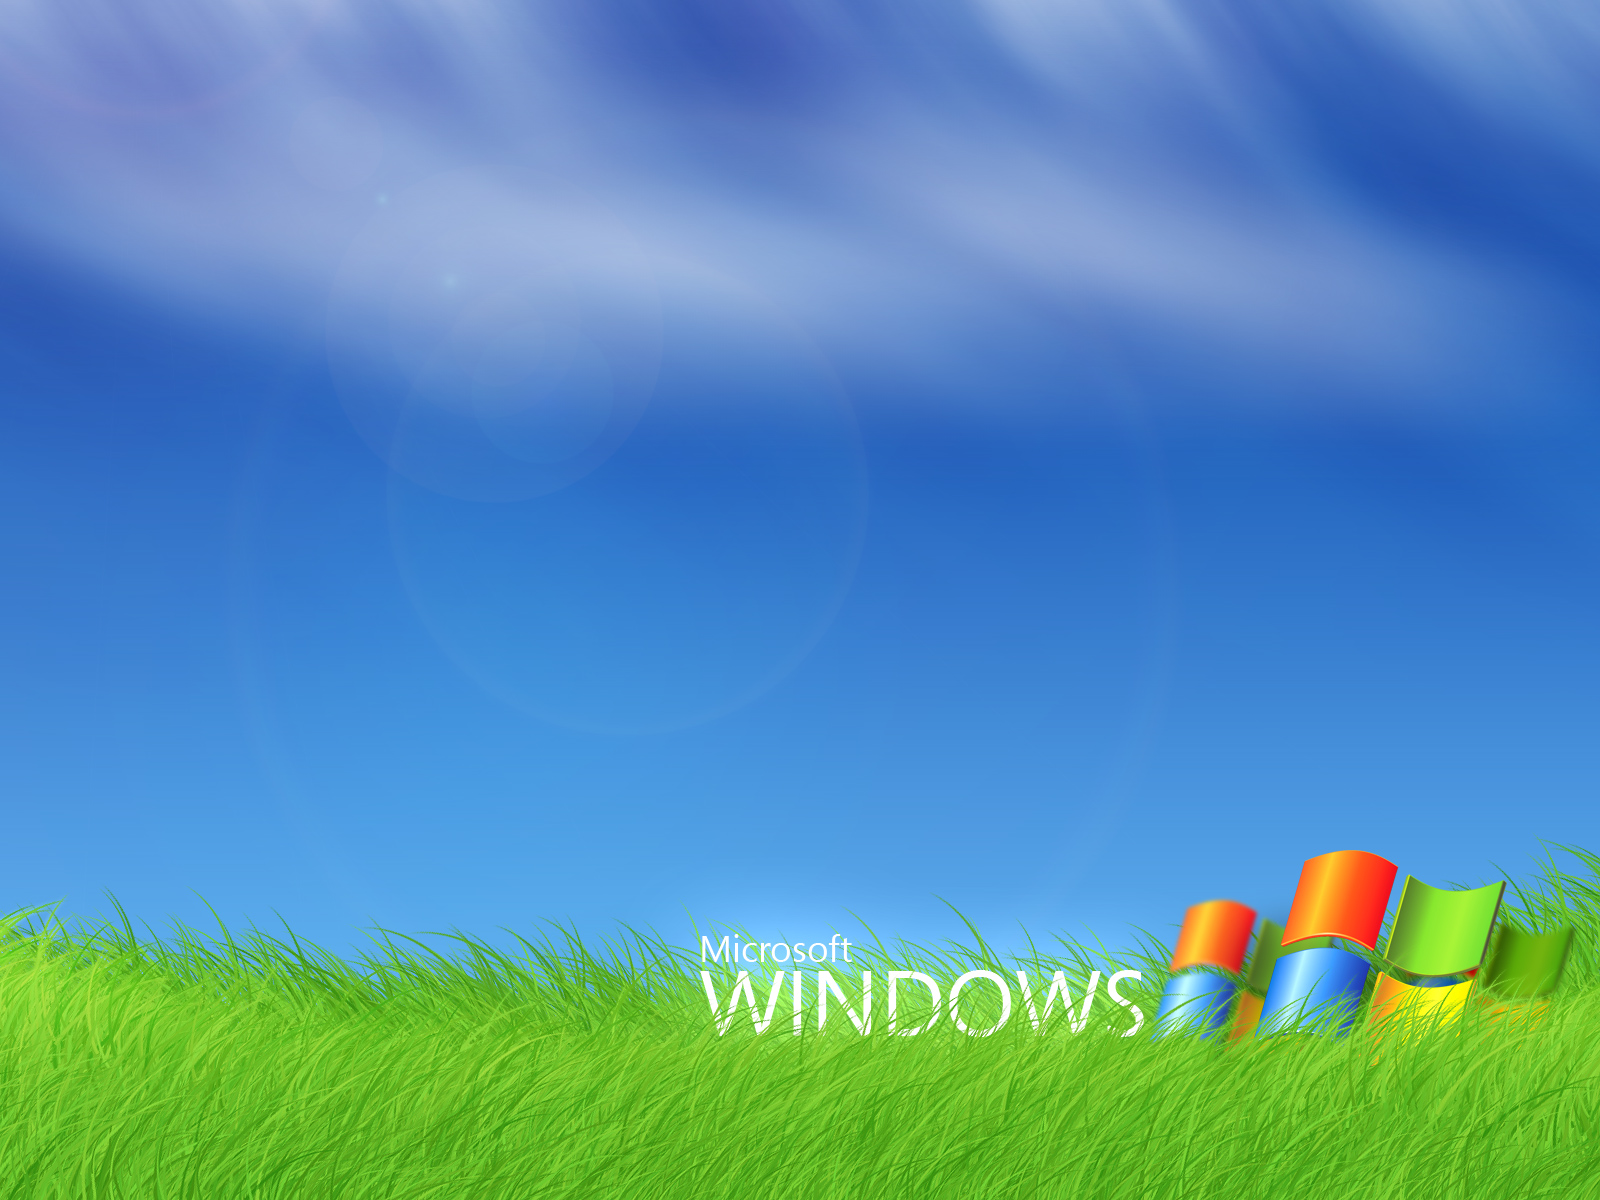 Wallpaper For Microsoft Windows On